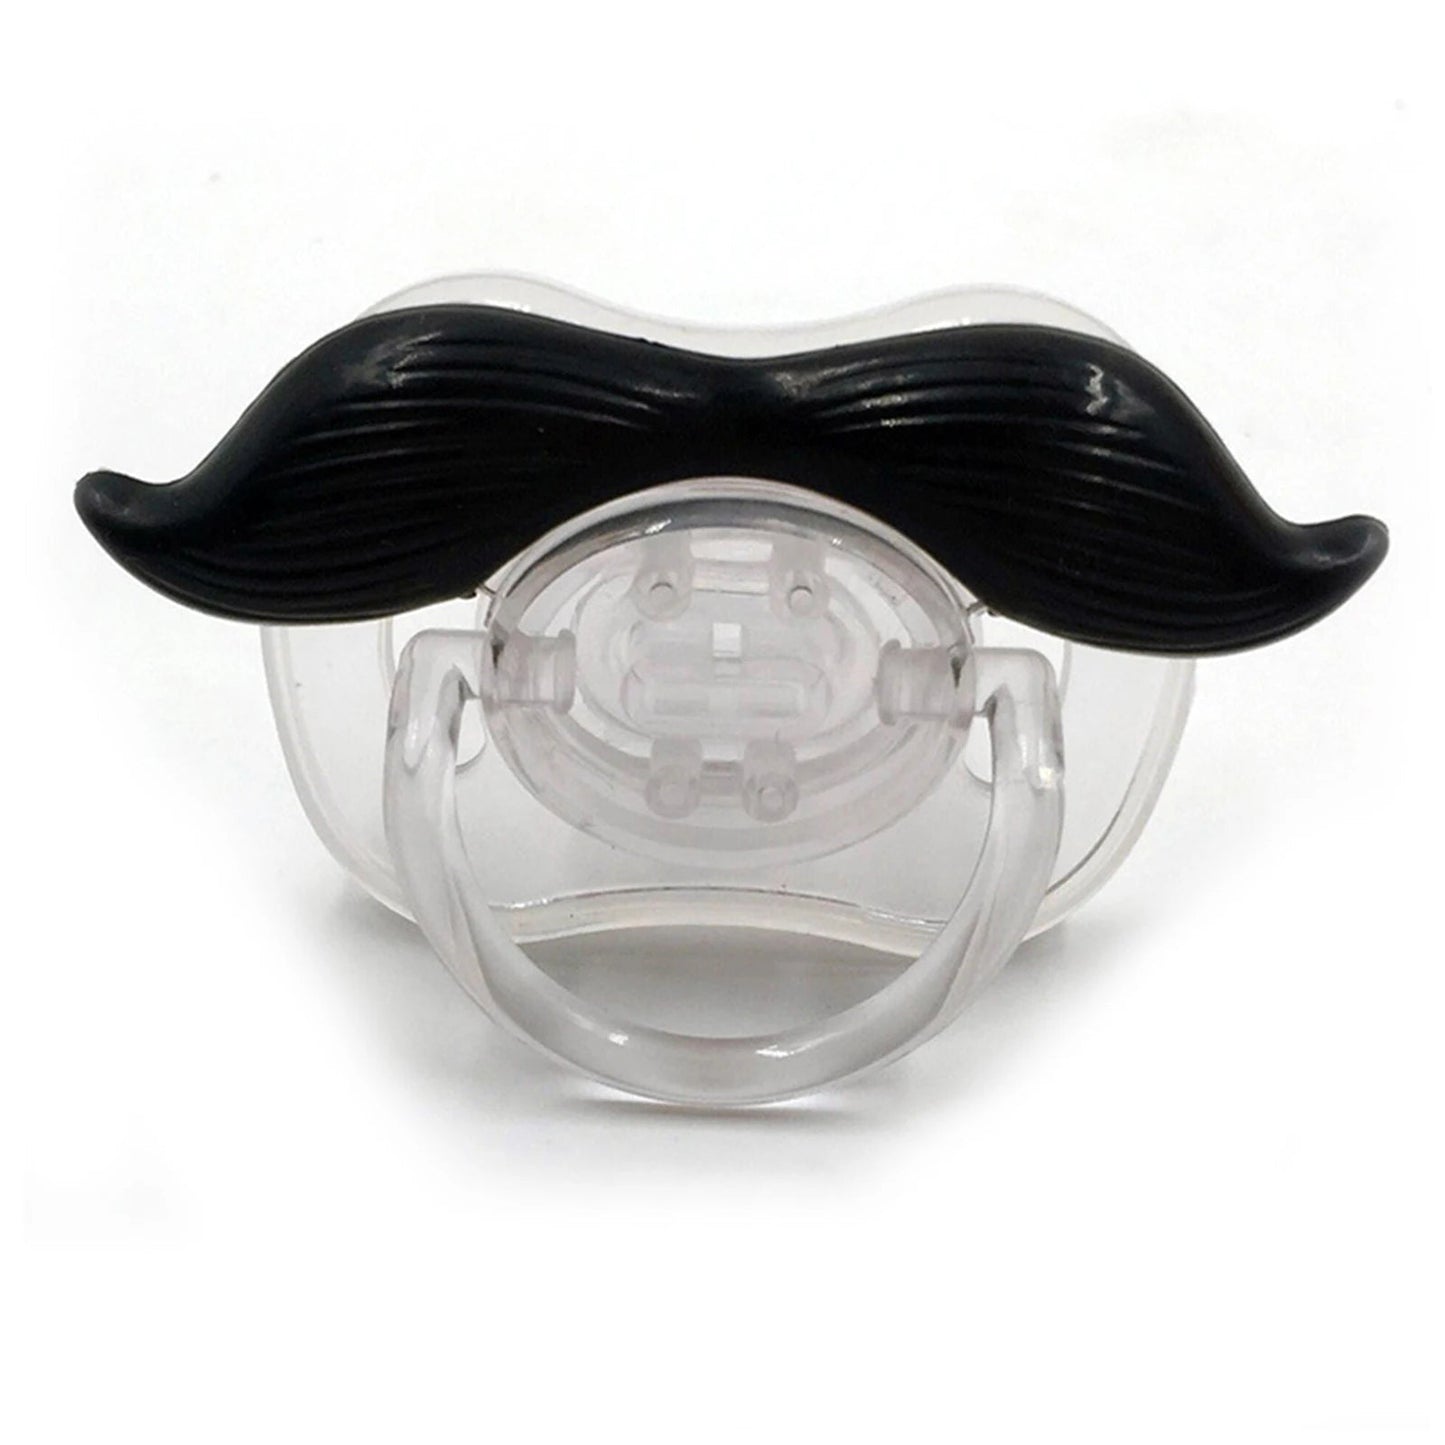 Baby Moustache Dummy - Joe Baby Products